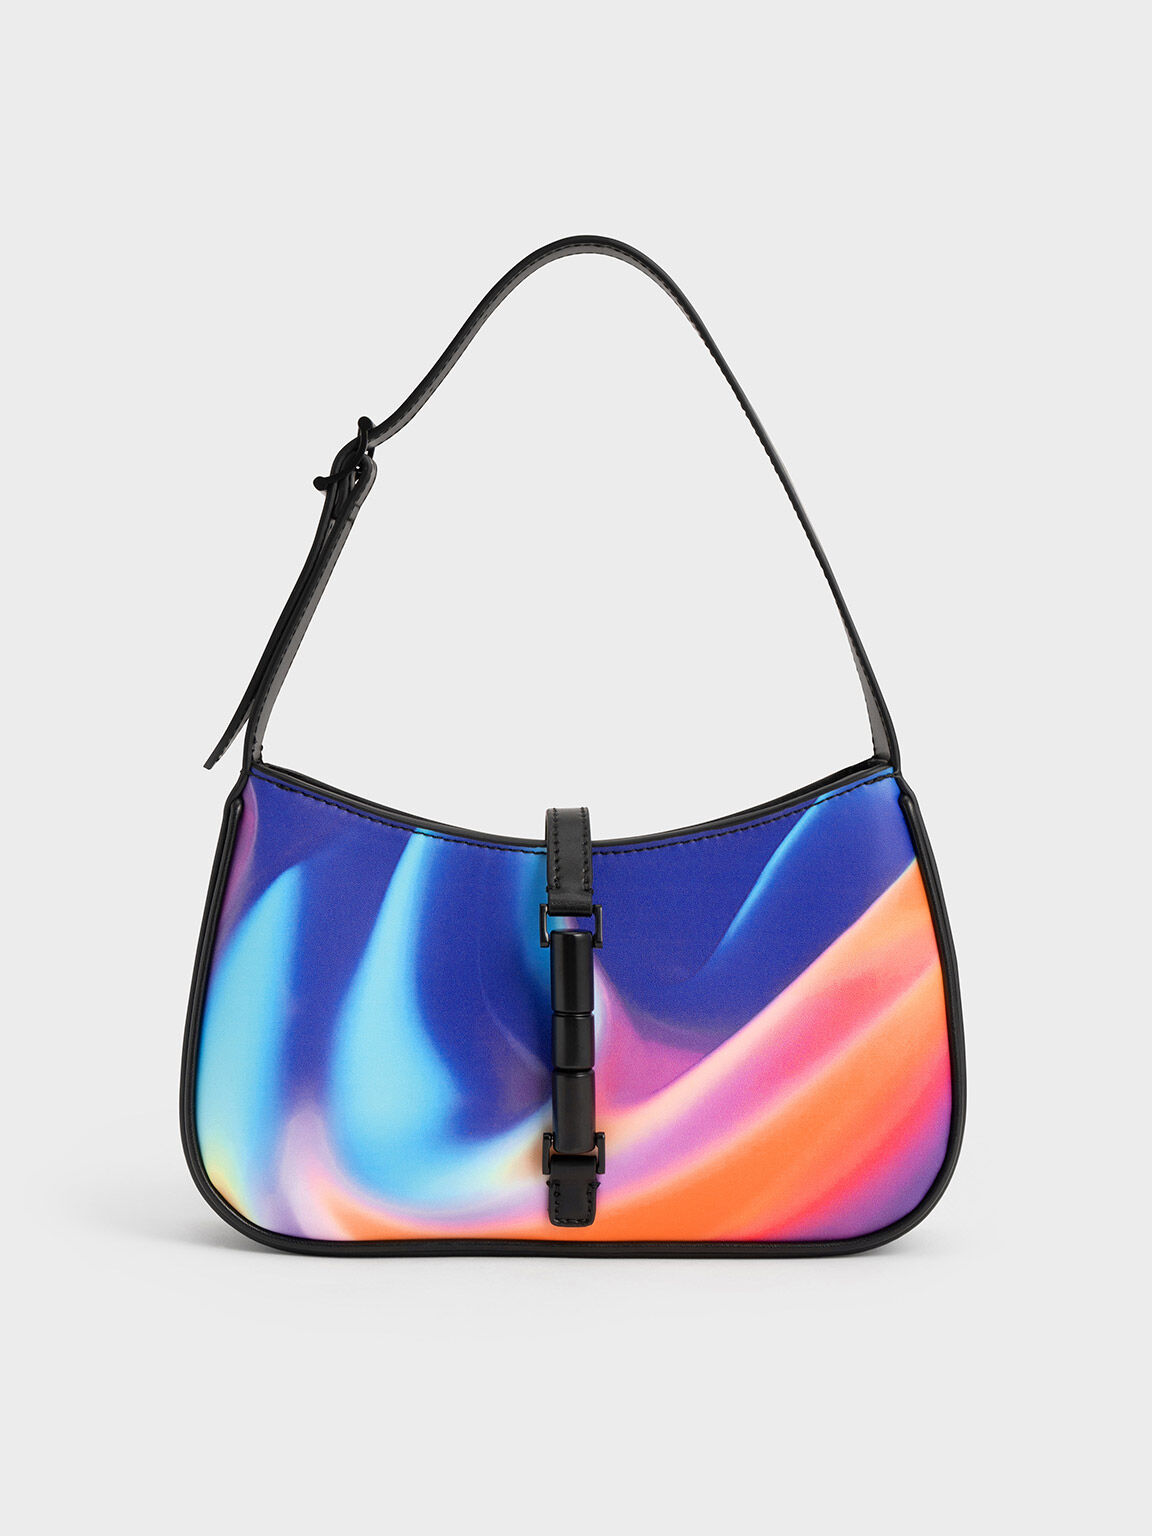 Clear Holographic Handbag Stadium Approved, Fashionable Iridescent Tote Bag  | Fruugo NZ